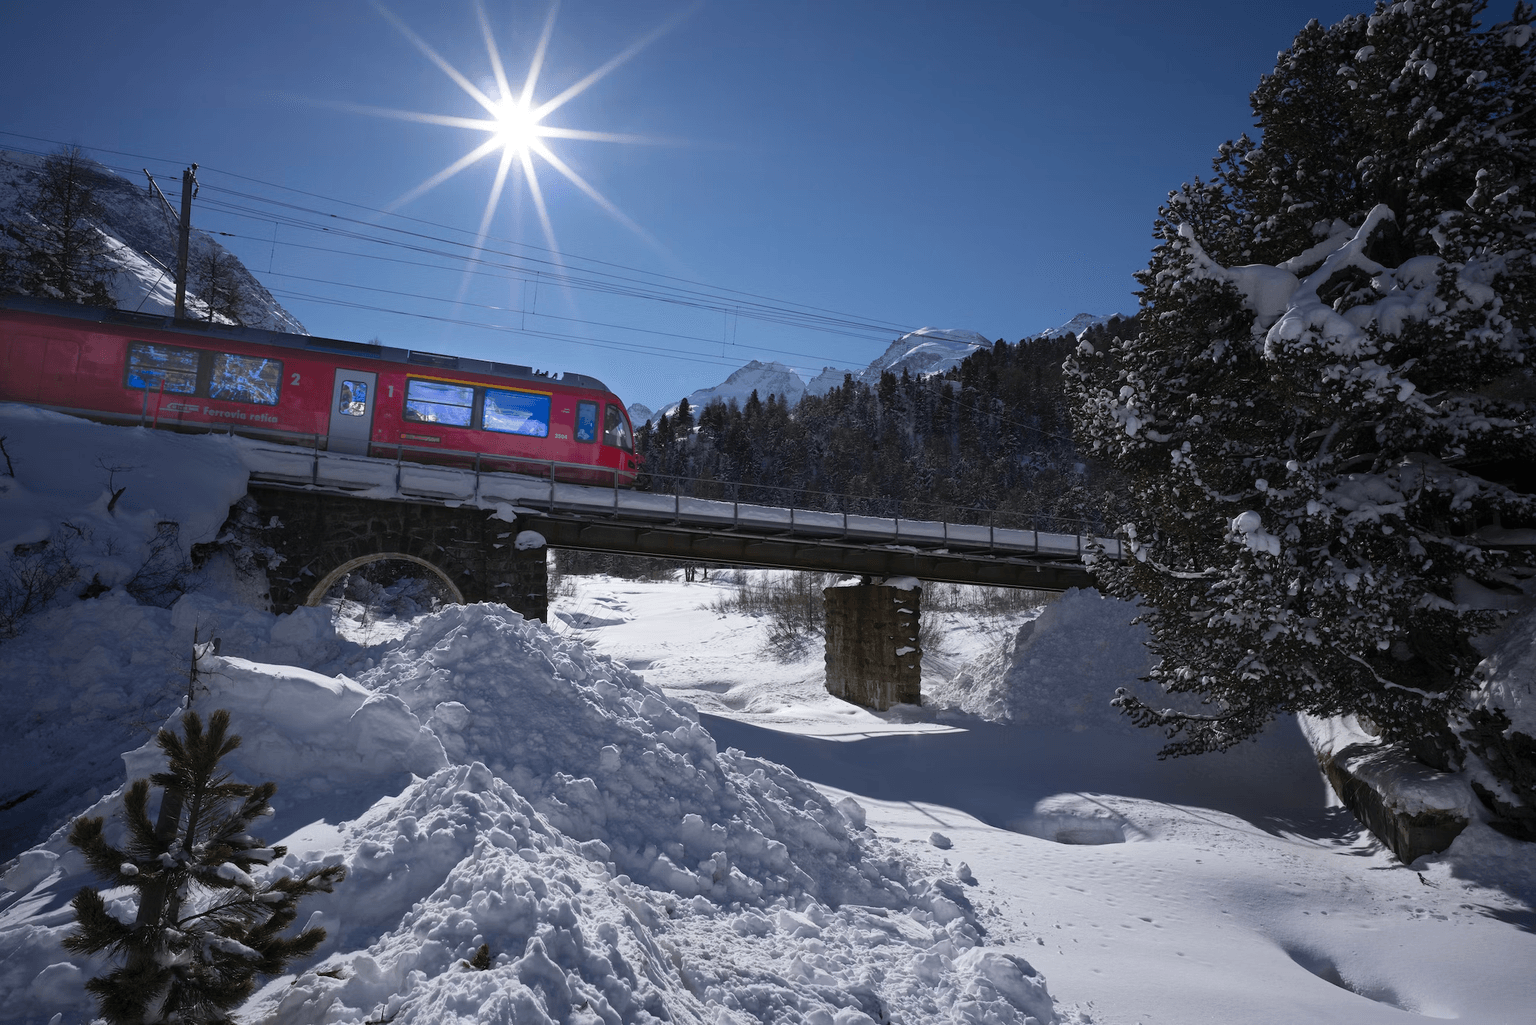 Train over bridge in snowy but sunny setting